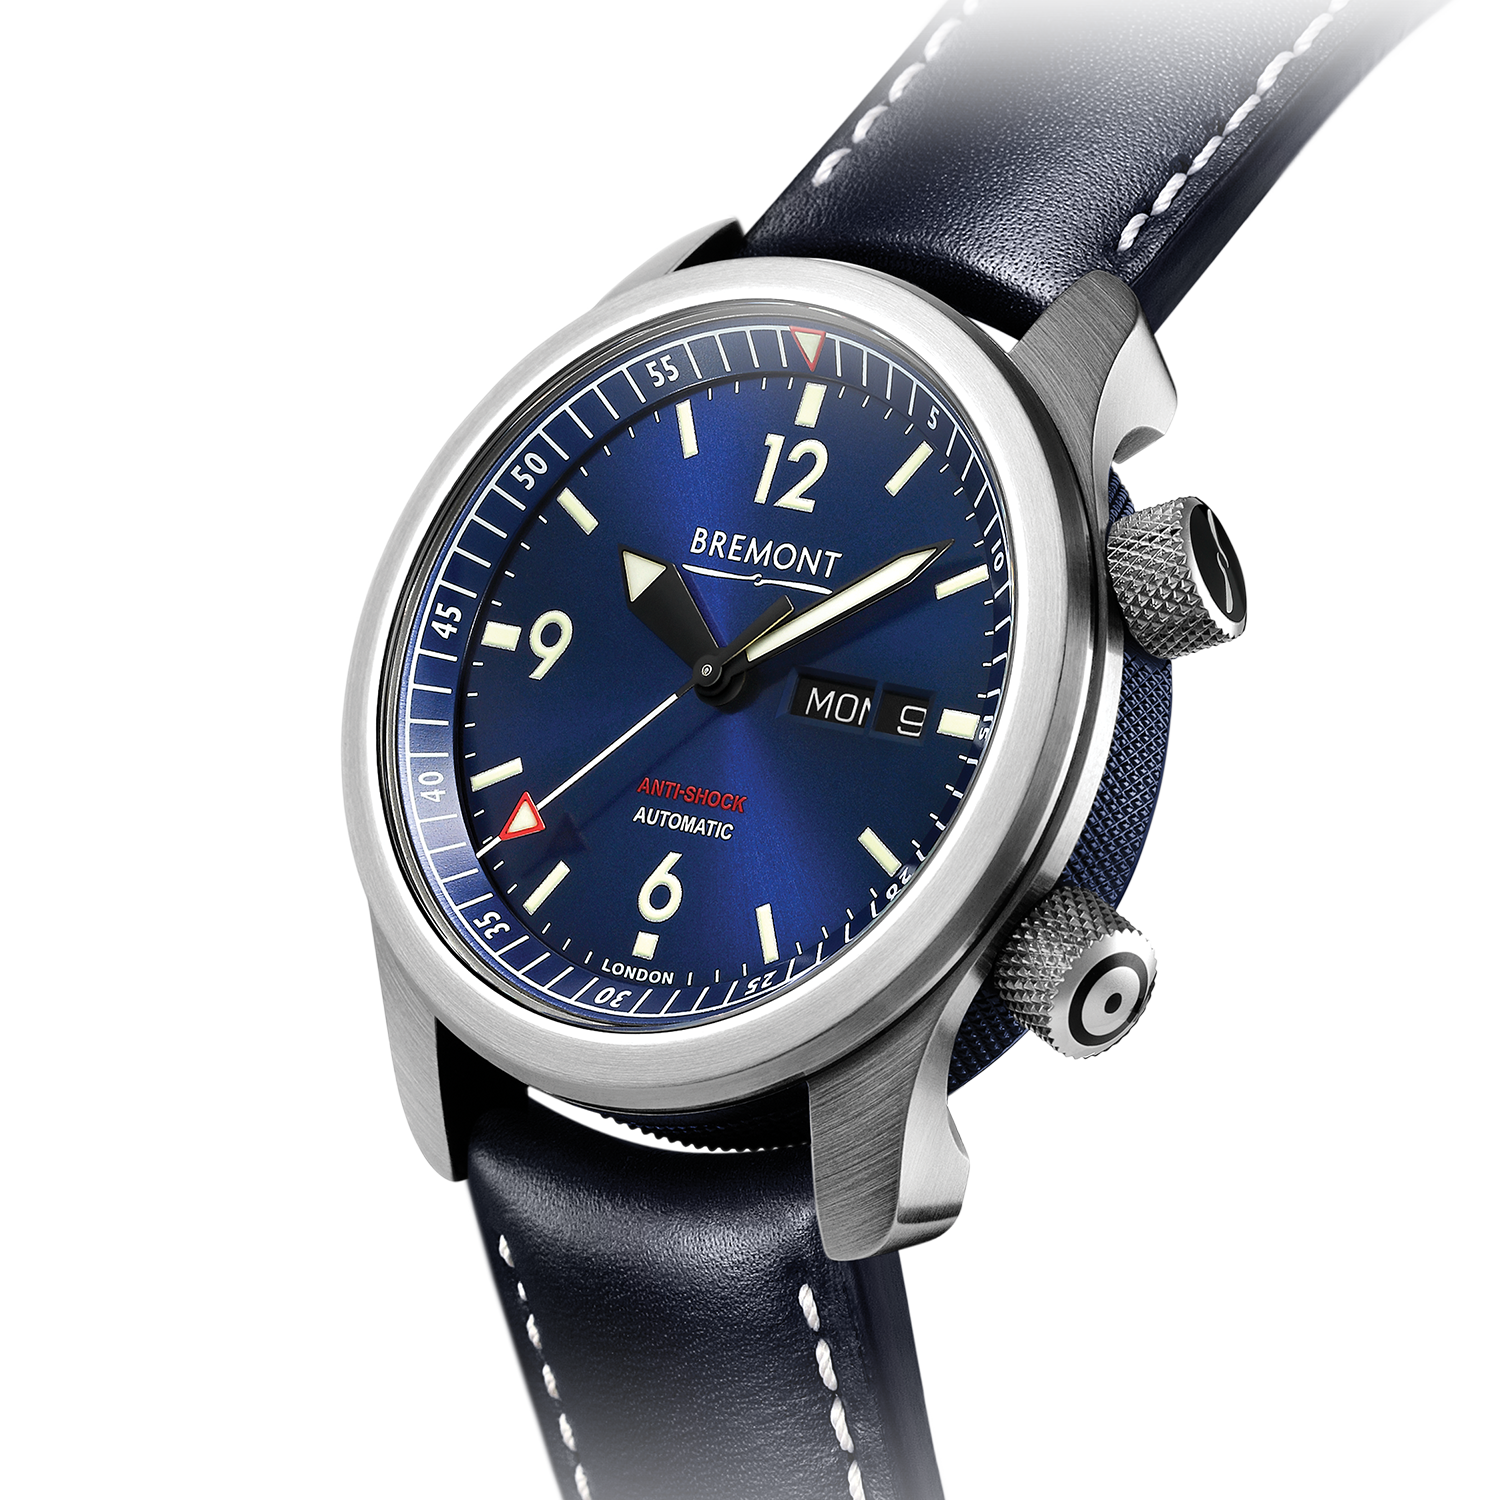 U-2 Blue Pilot's Watch